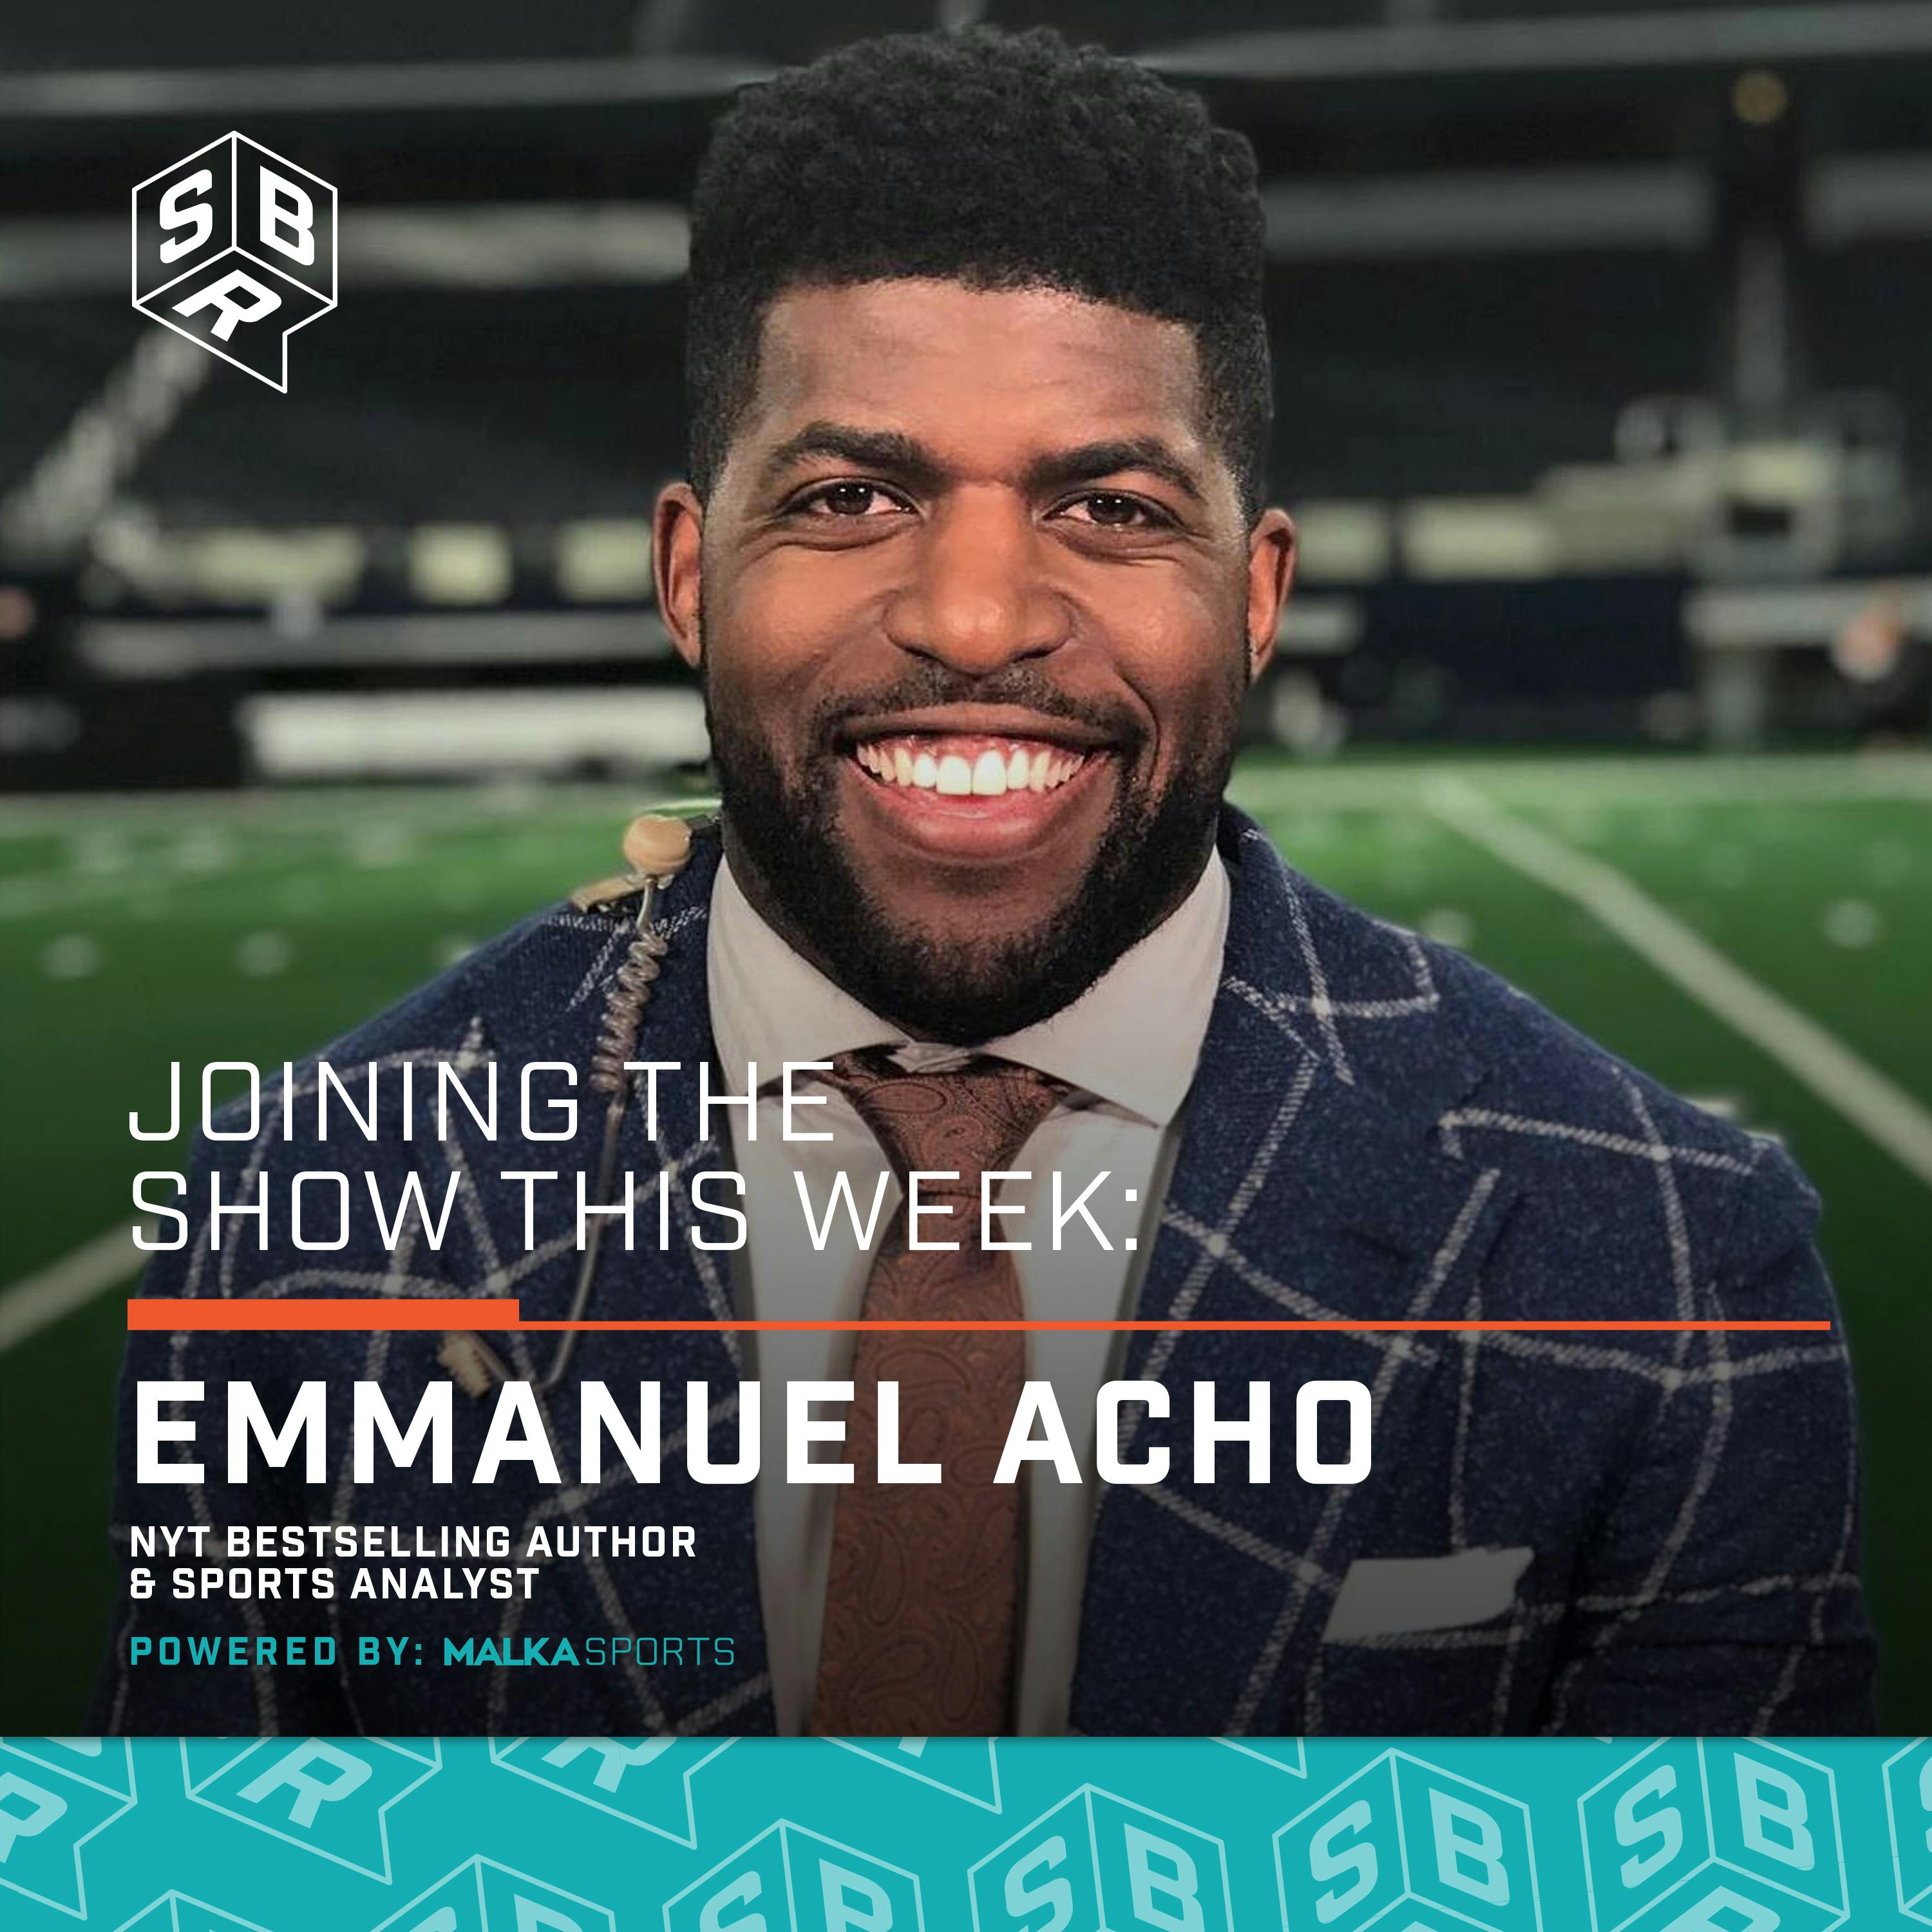 Emmanuel Acho (@Emmanuel Acho) - NYT Bestselling Author & Sports Analyst